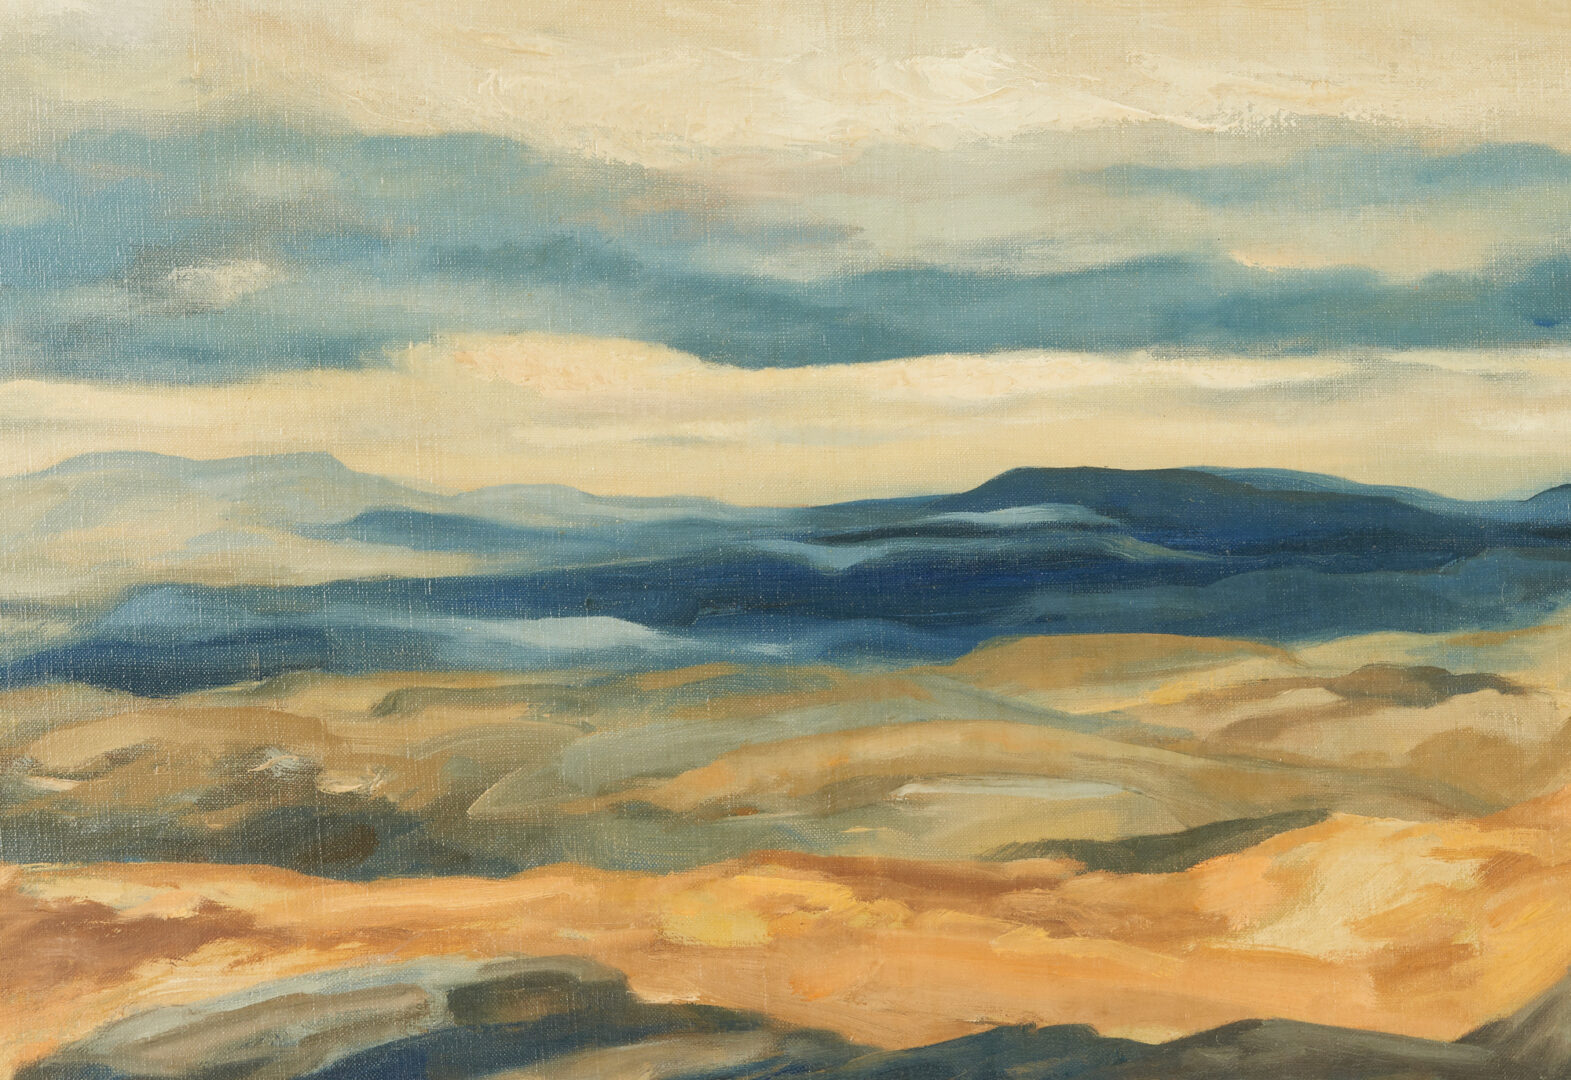 Lot 436: C. Kermit Ewing Expressionist Oil on Canvas, Desert Landscape